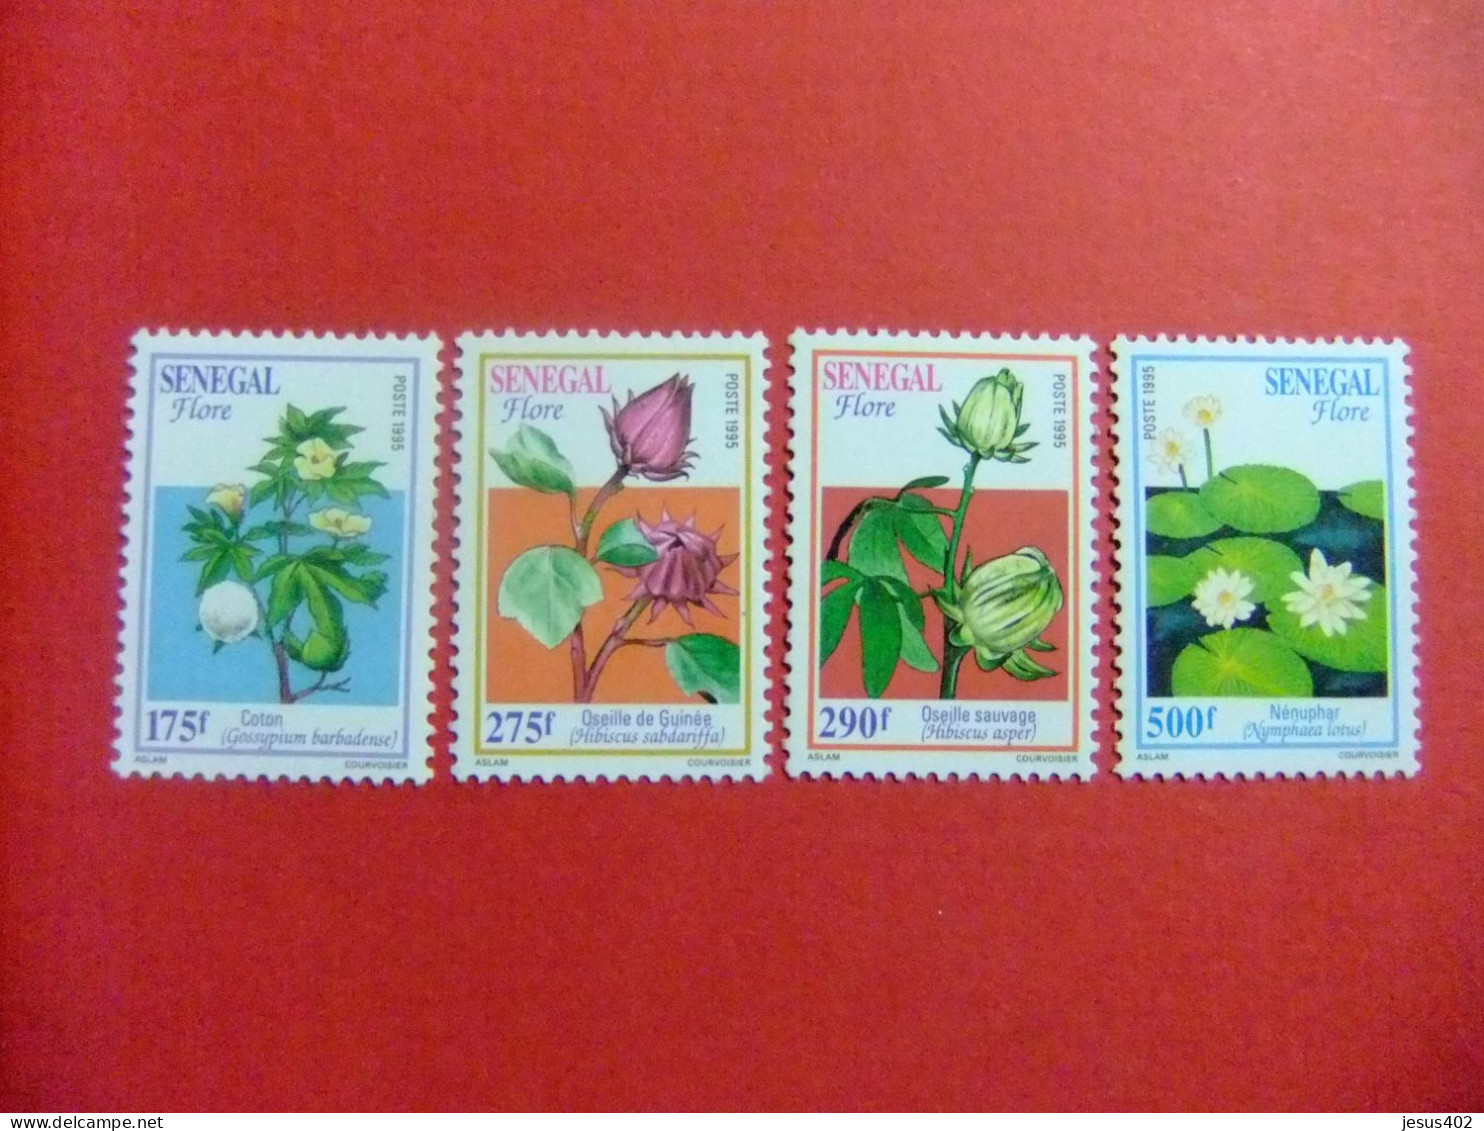 55 REPUBLICA SENEGAL 1995 / FLORA FLORES / YVERT 1169 / 1172 MNH - Senegal (1960-...)